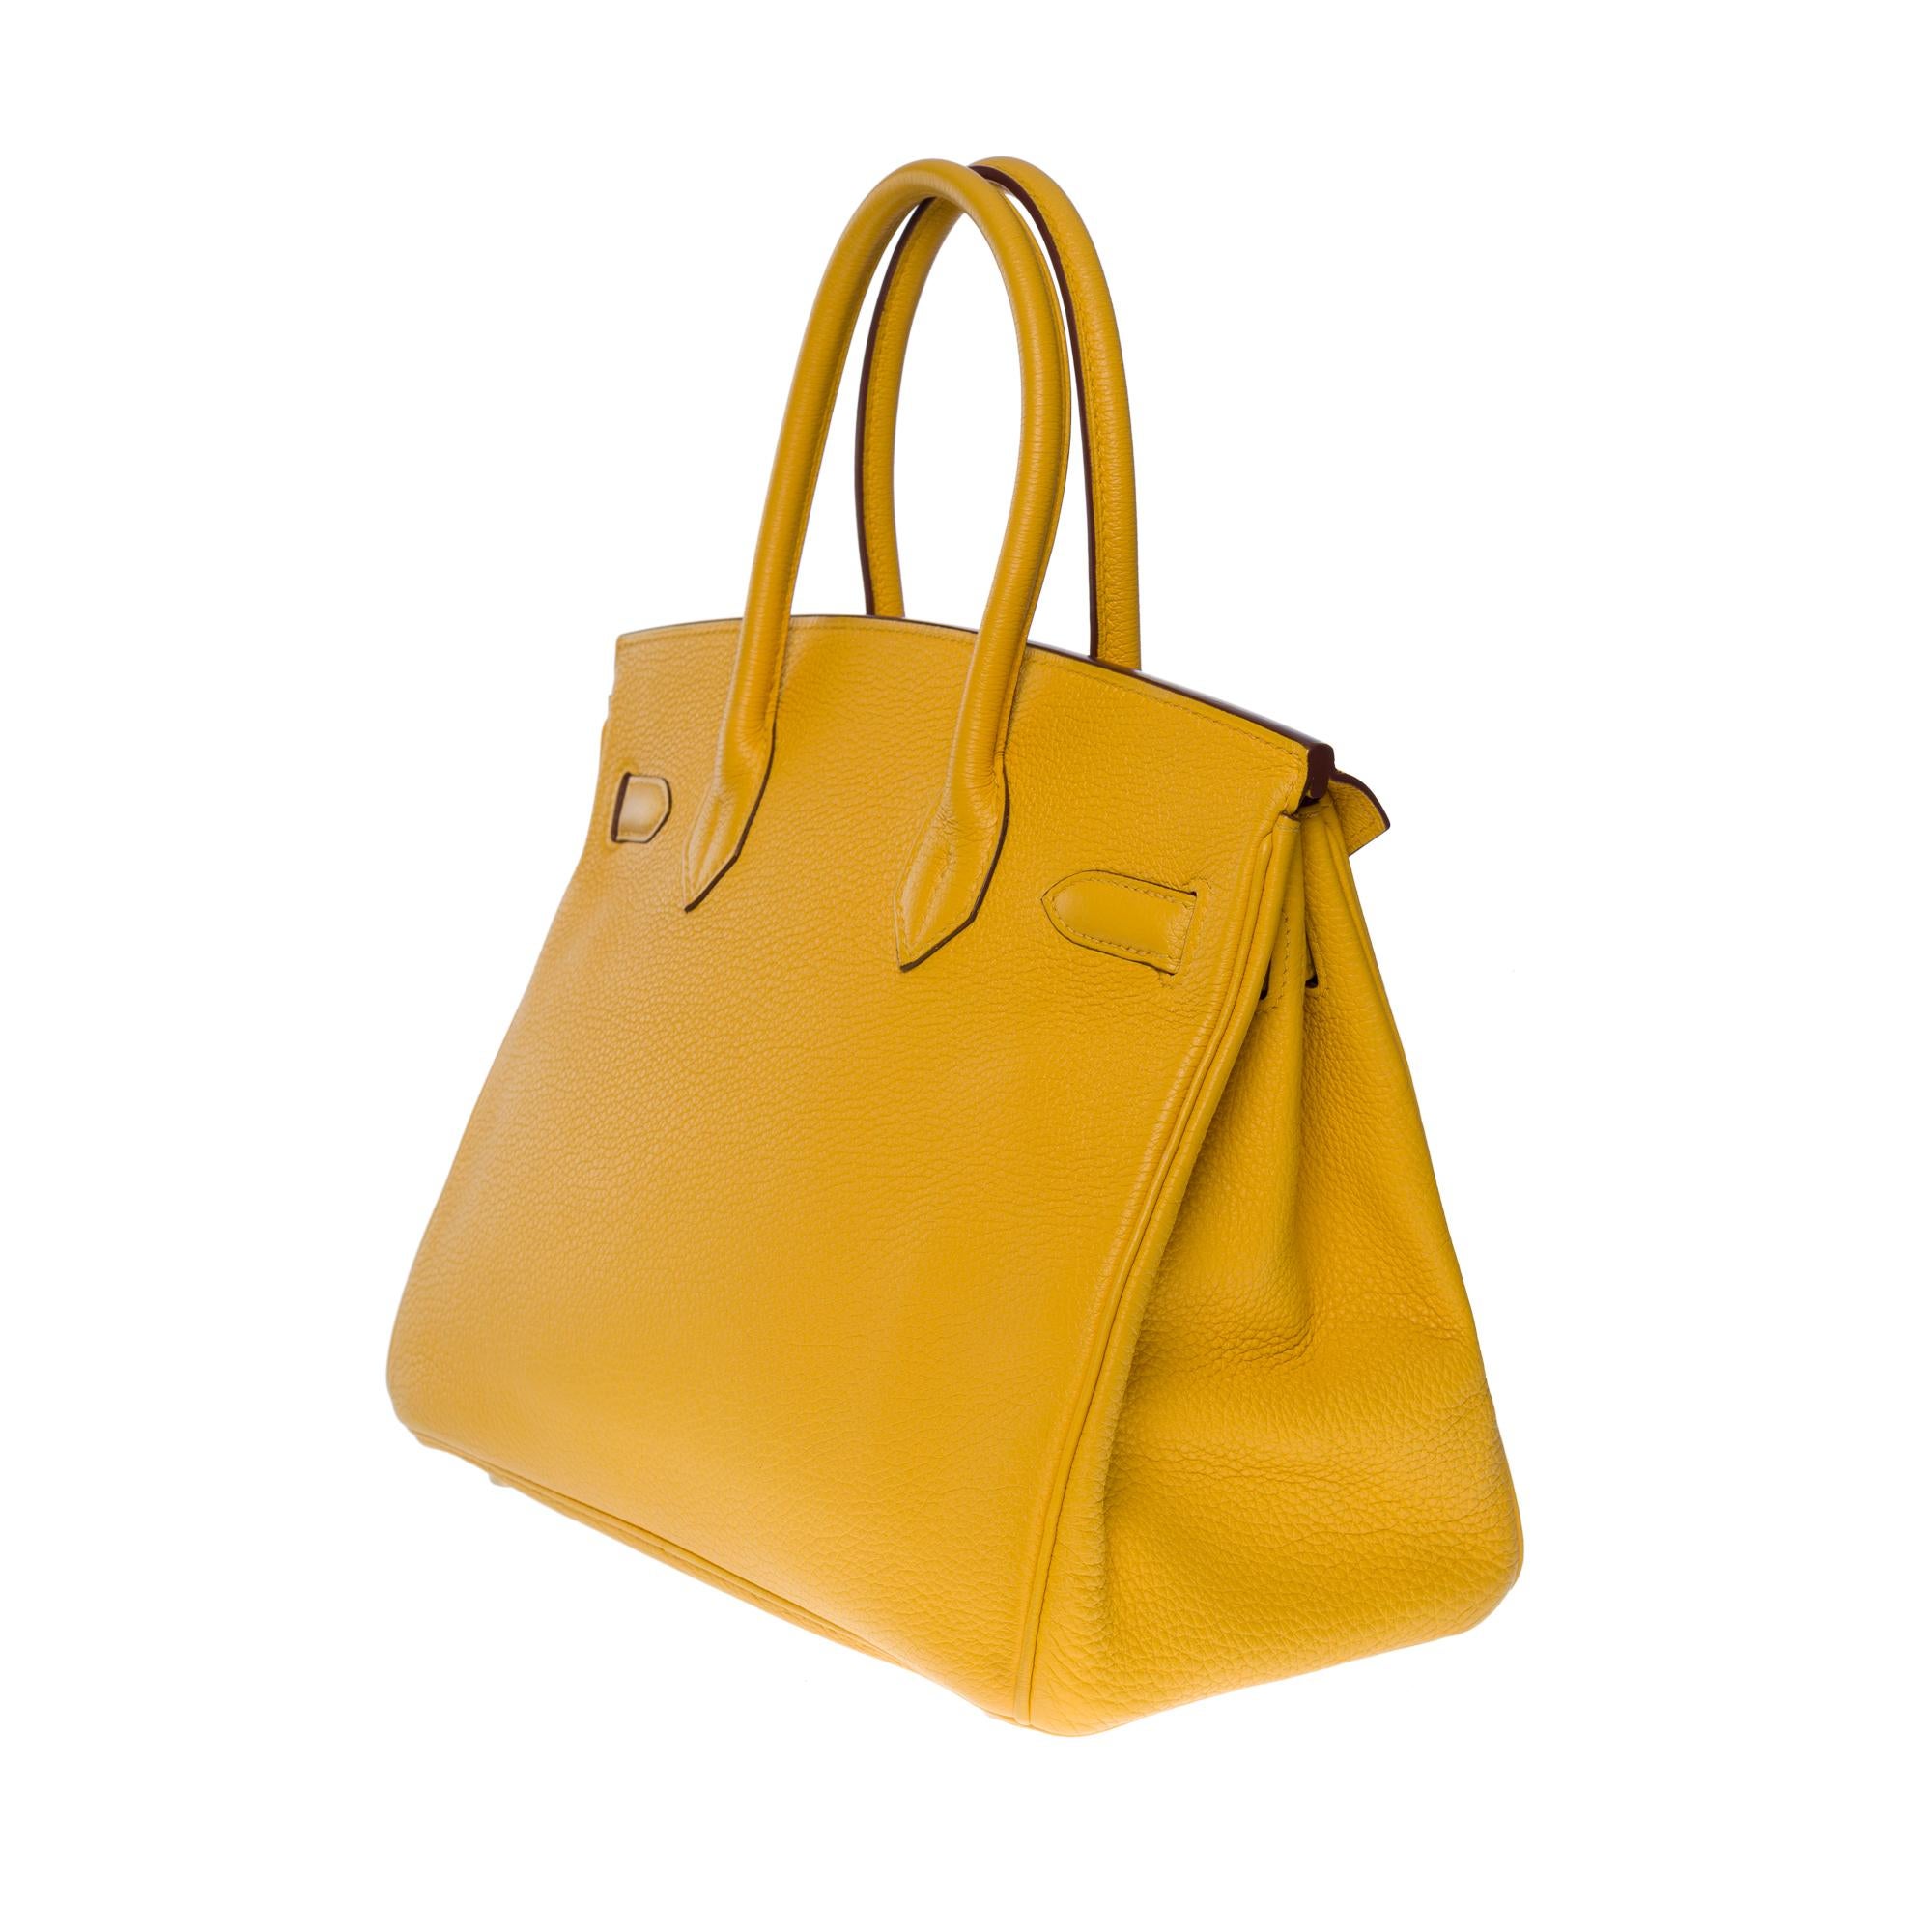 Amazing & Bright Hermès Birkin 30 handbag in Yellow Togo leather, GHW 1